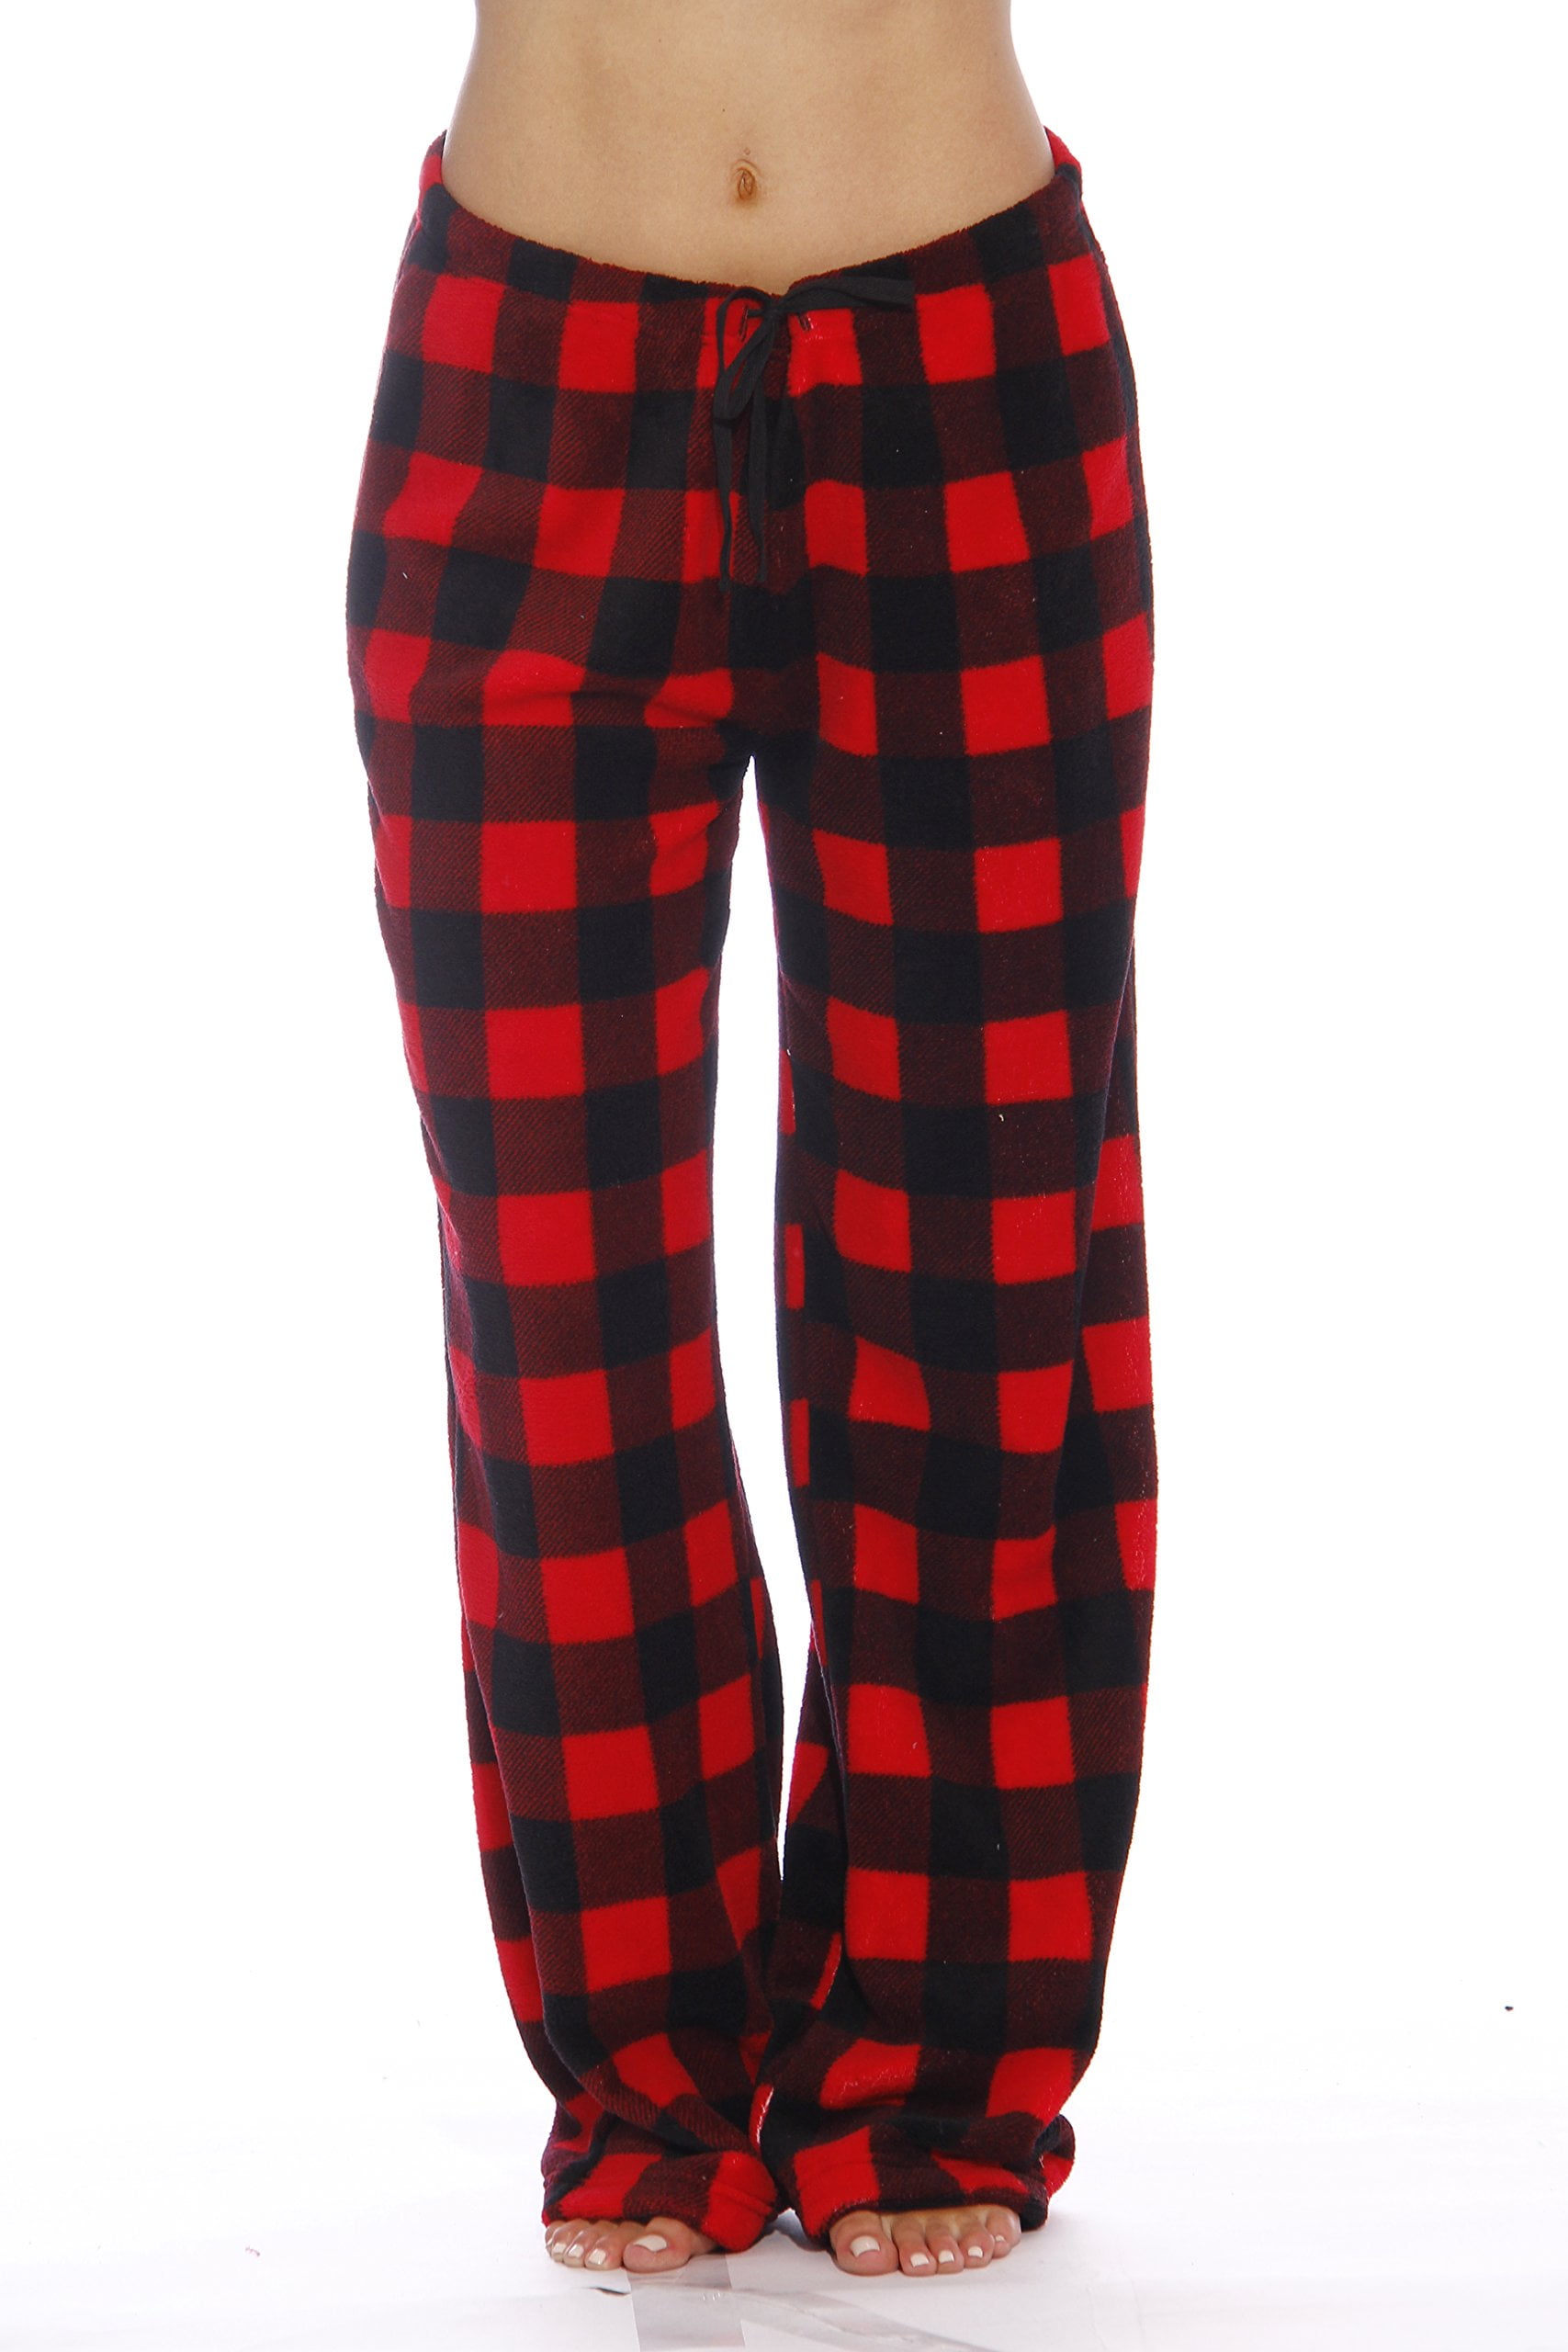 Just Love Plush Pajama Pants for Girls Fleece PJs 